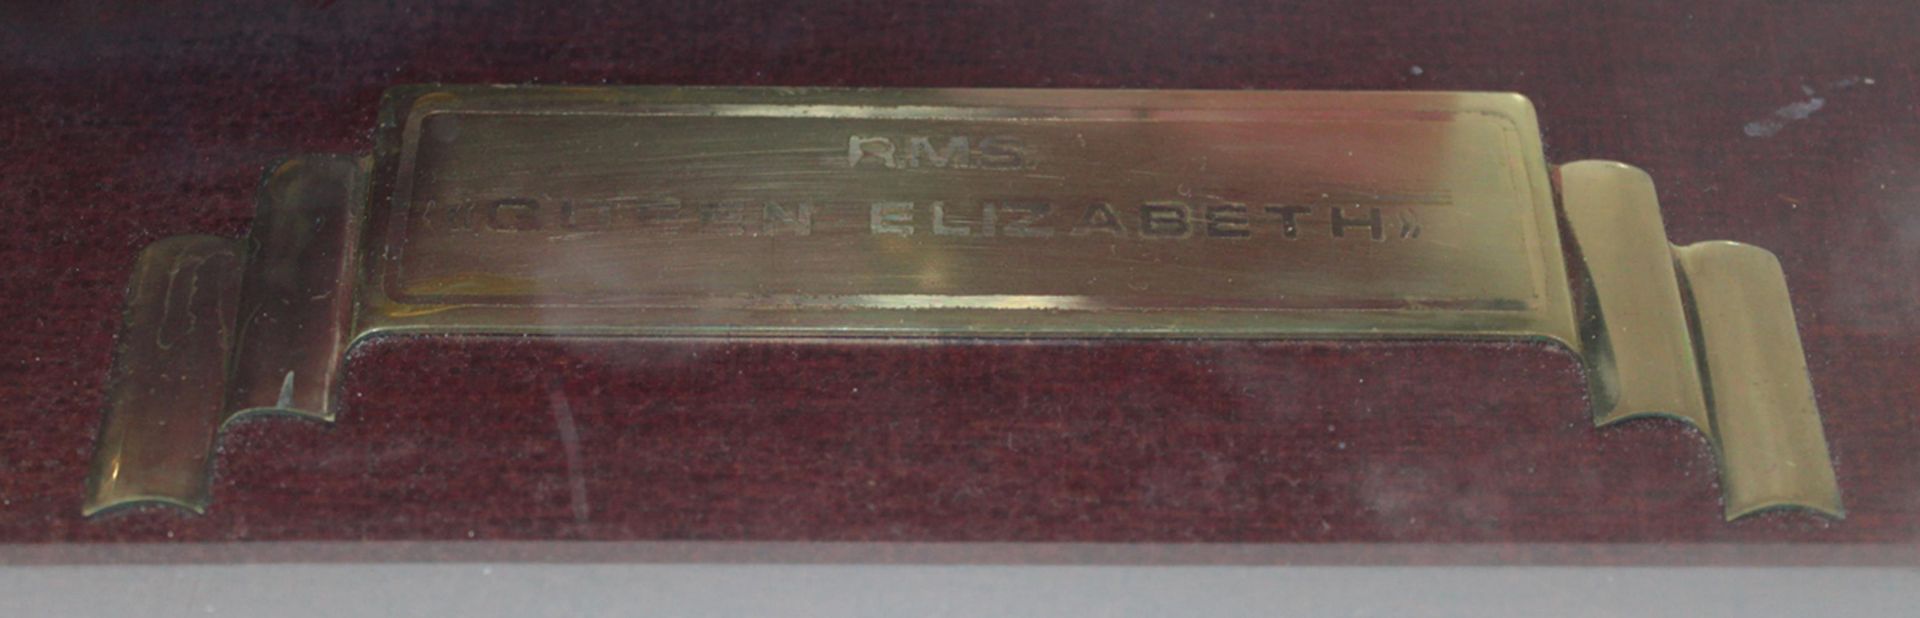 RMS Queen Elizabeth. - Image 2 of 3